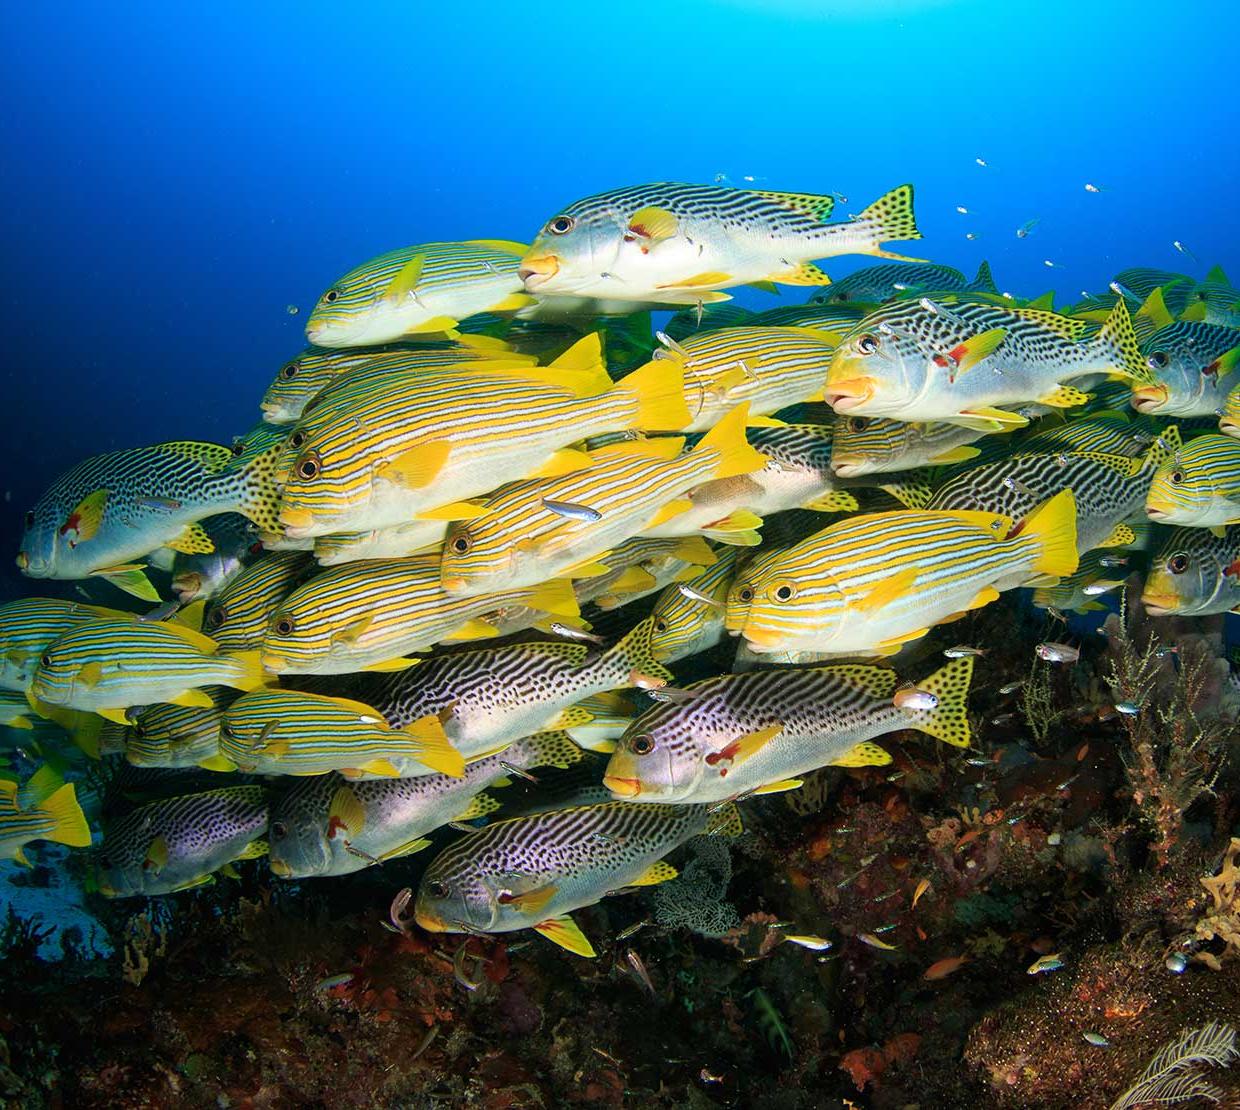 school of sweetlips swimming near ocean floor